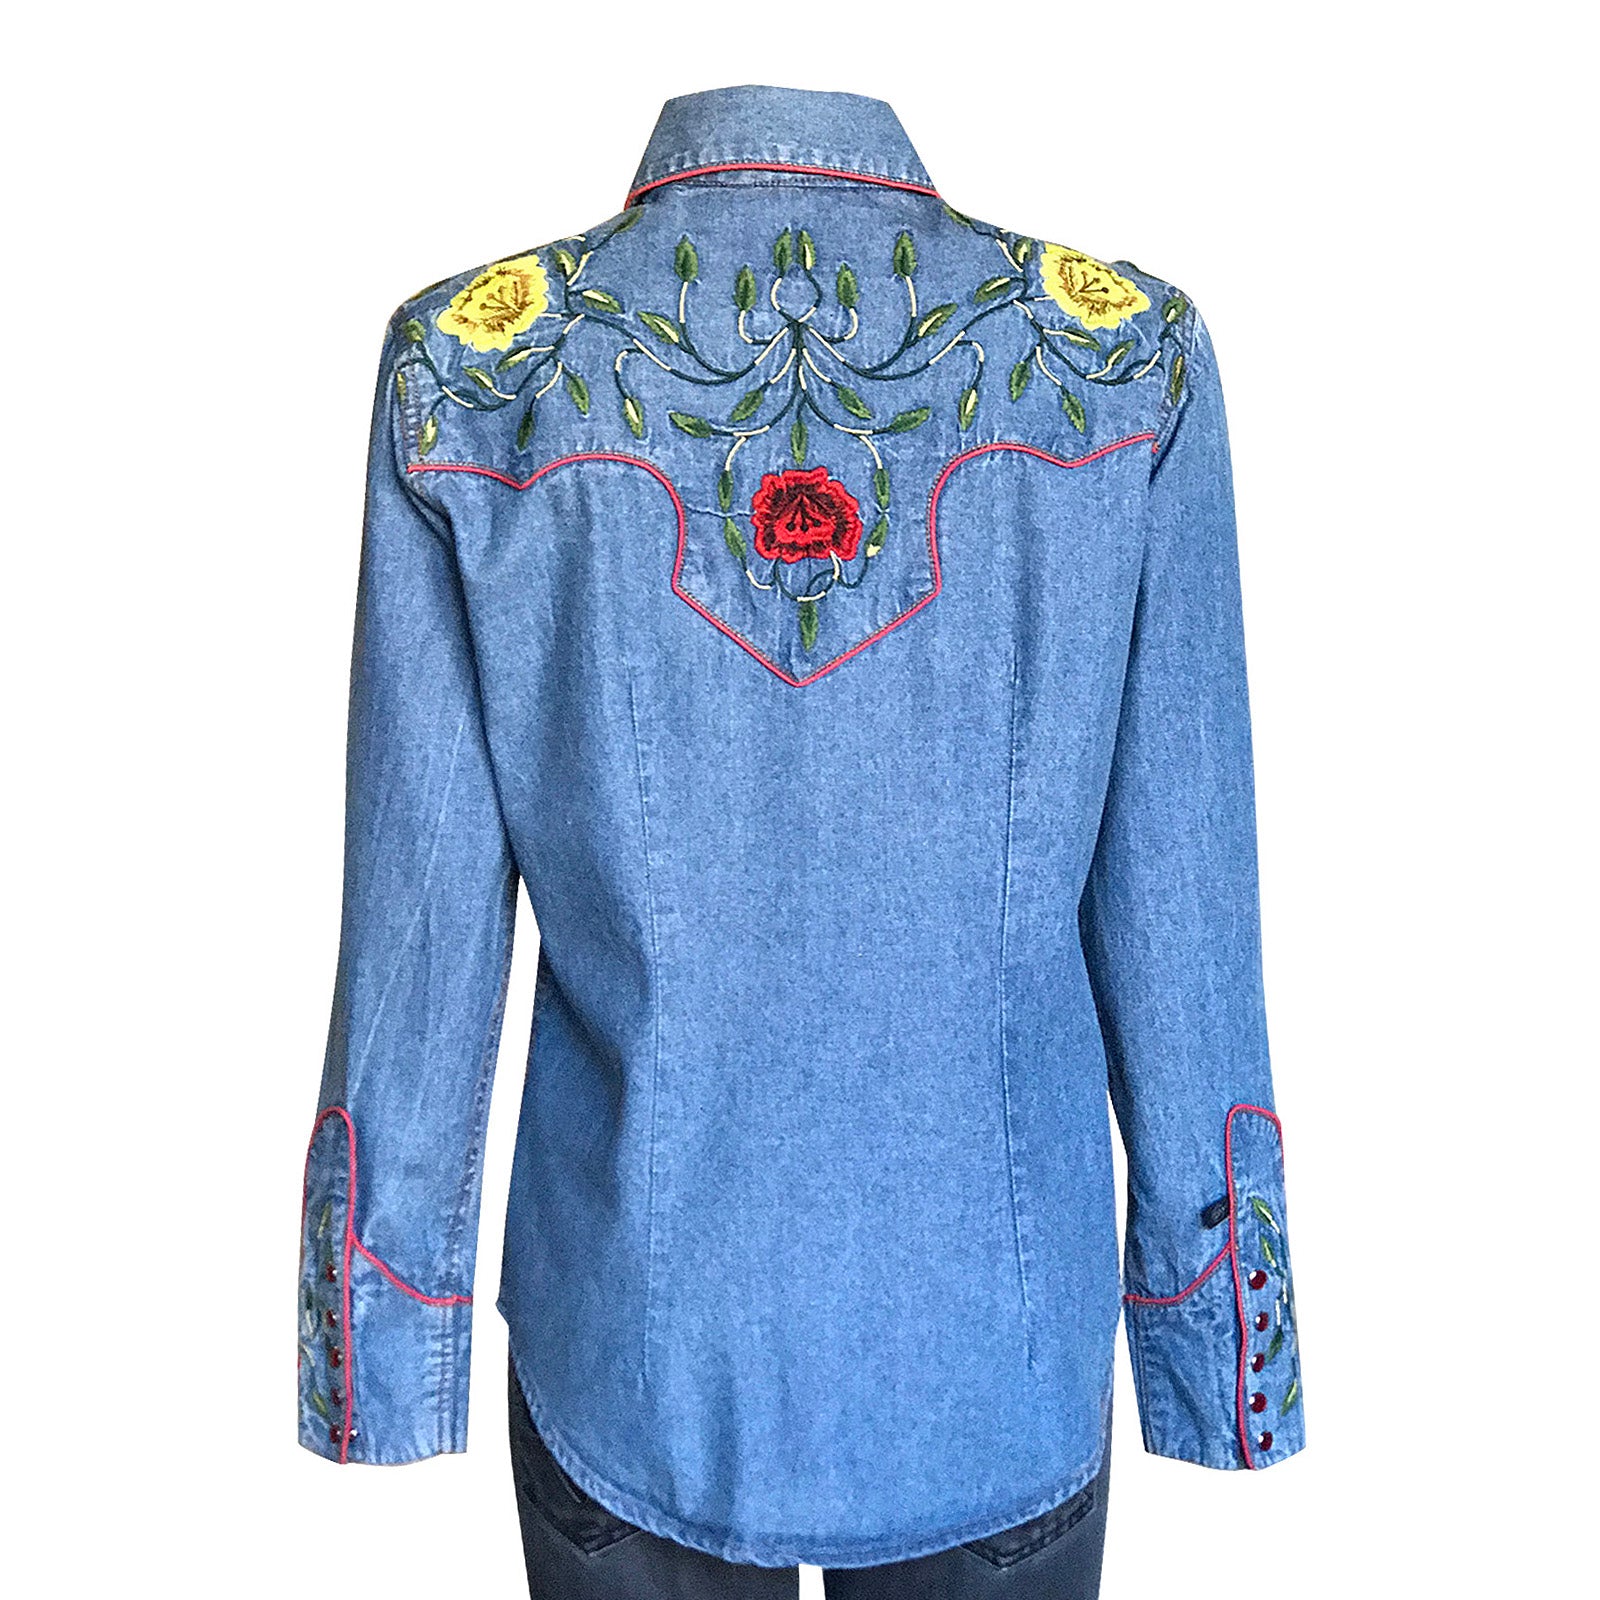 Women's embroidered denim shirt - Ukie Style